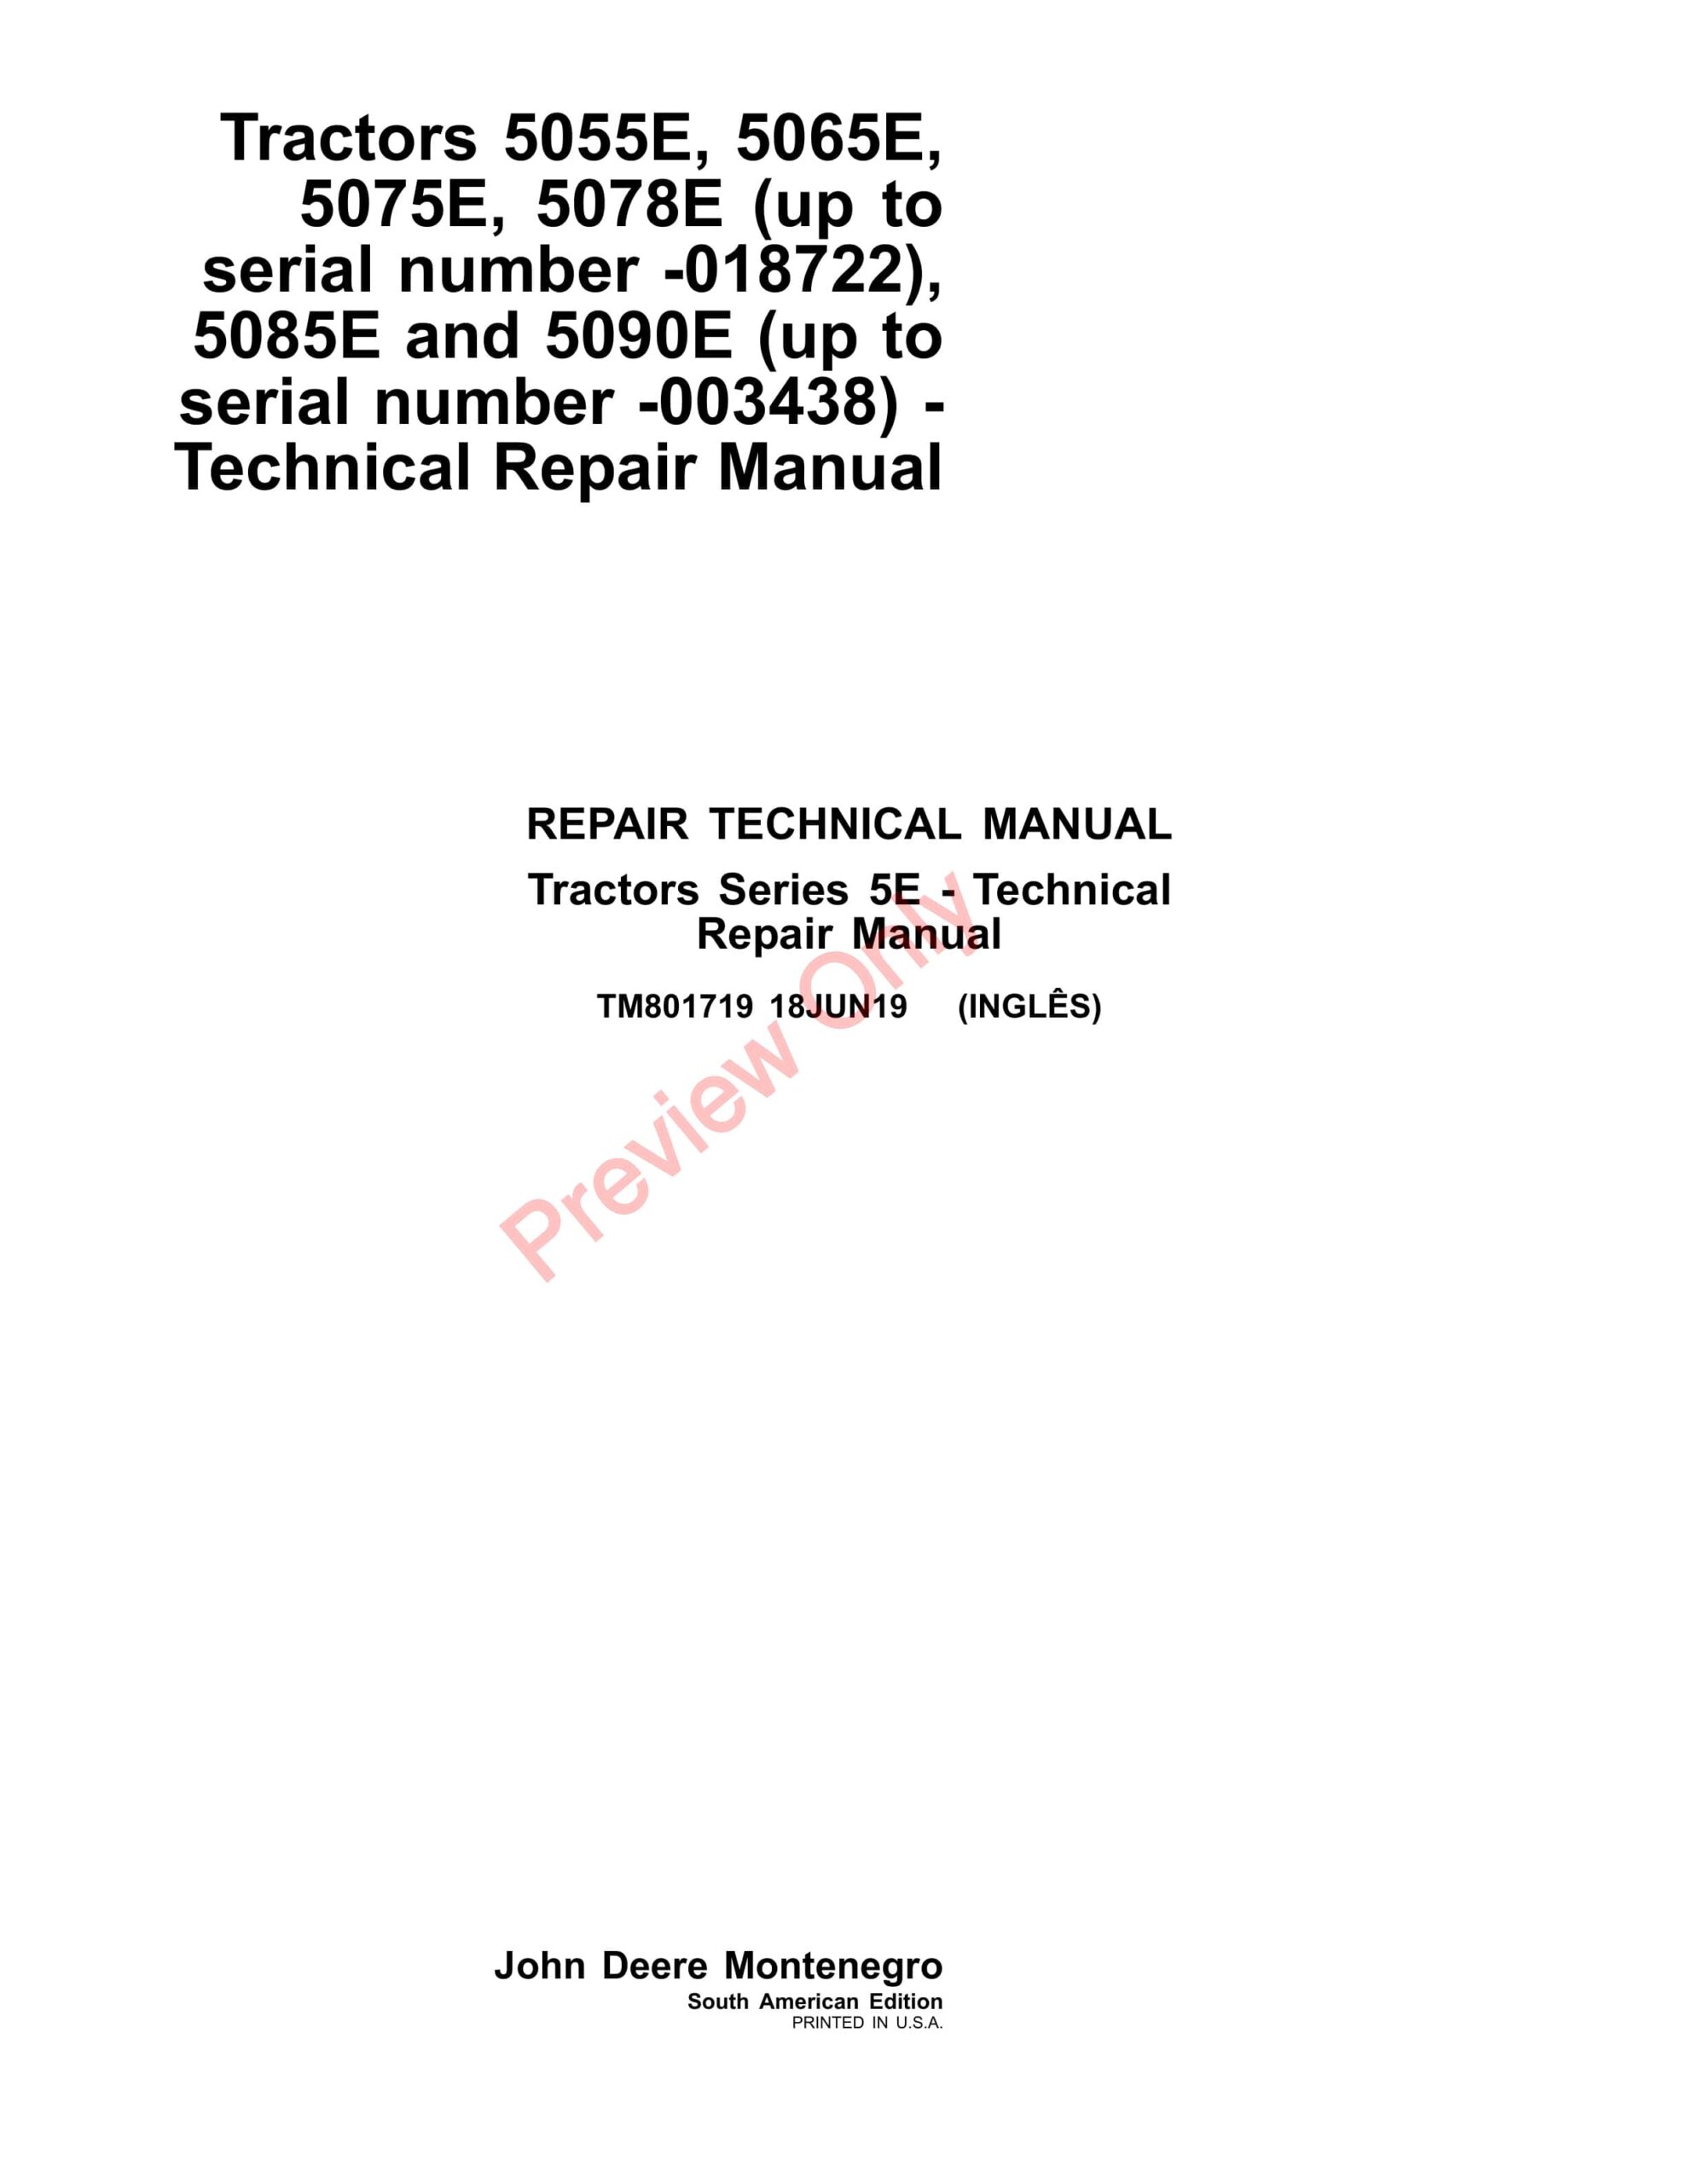 John Deere 5055E, 5065E, 5075E, 5078E, 5085E and 5090E Tractors Repair Technical Manual TM801719 18JUN19-1